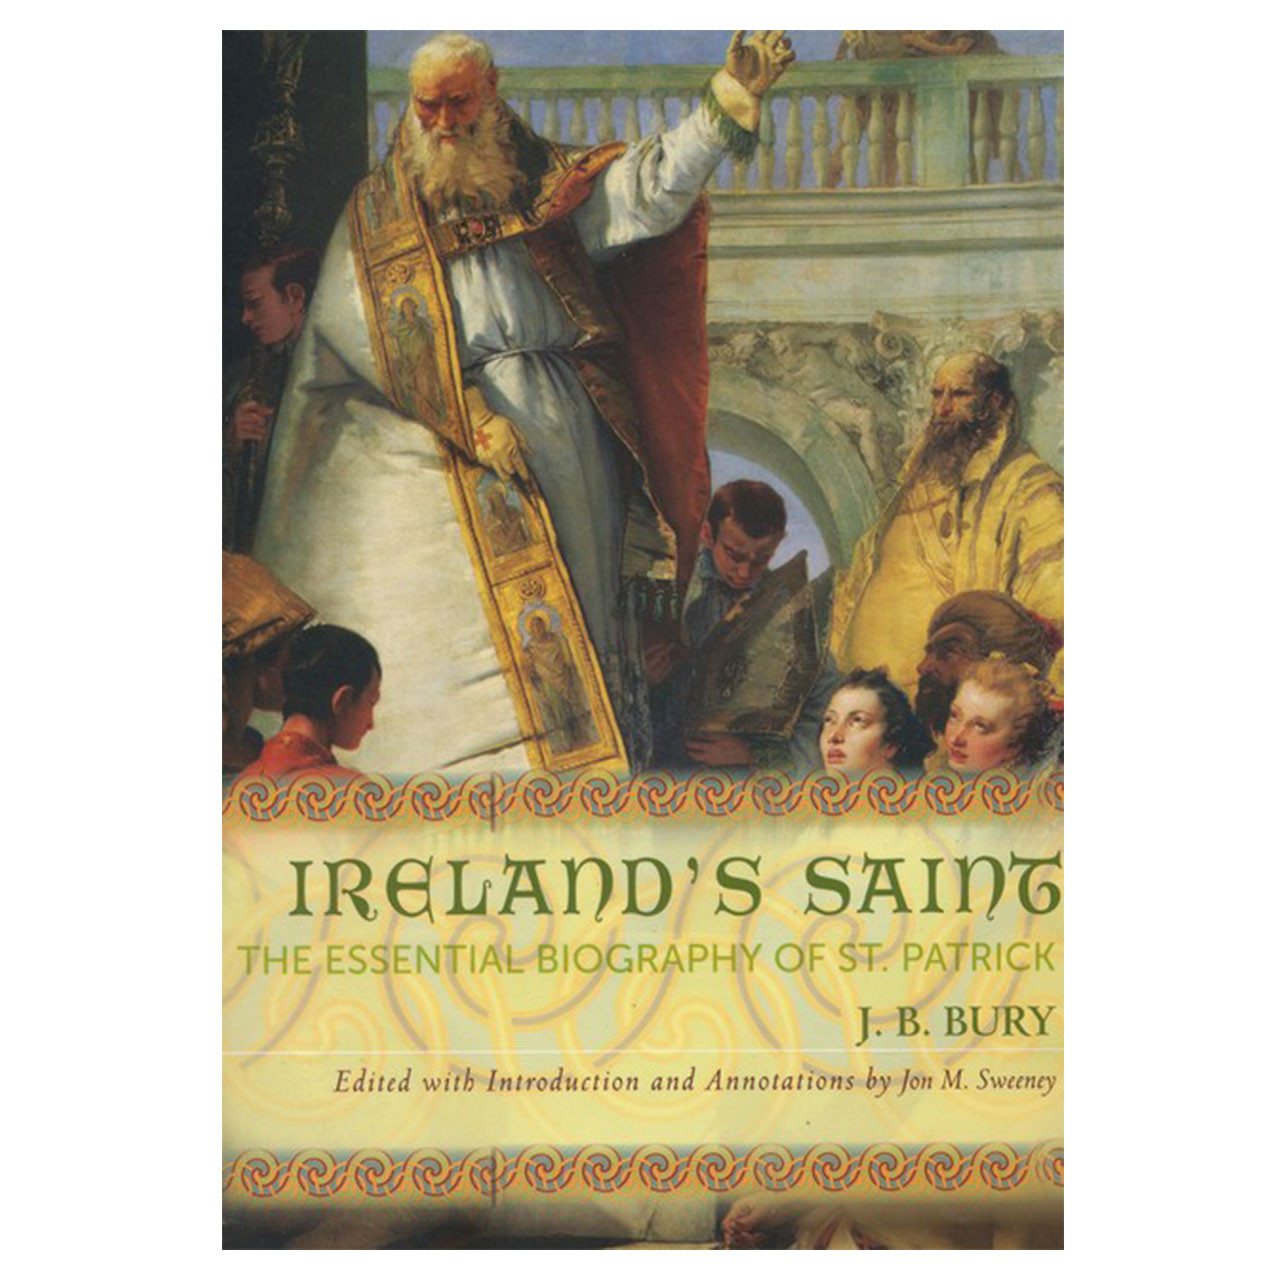 Ireland's Saint Patrick by J.B. Bury